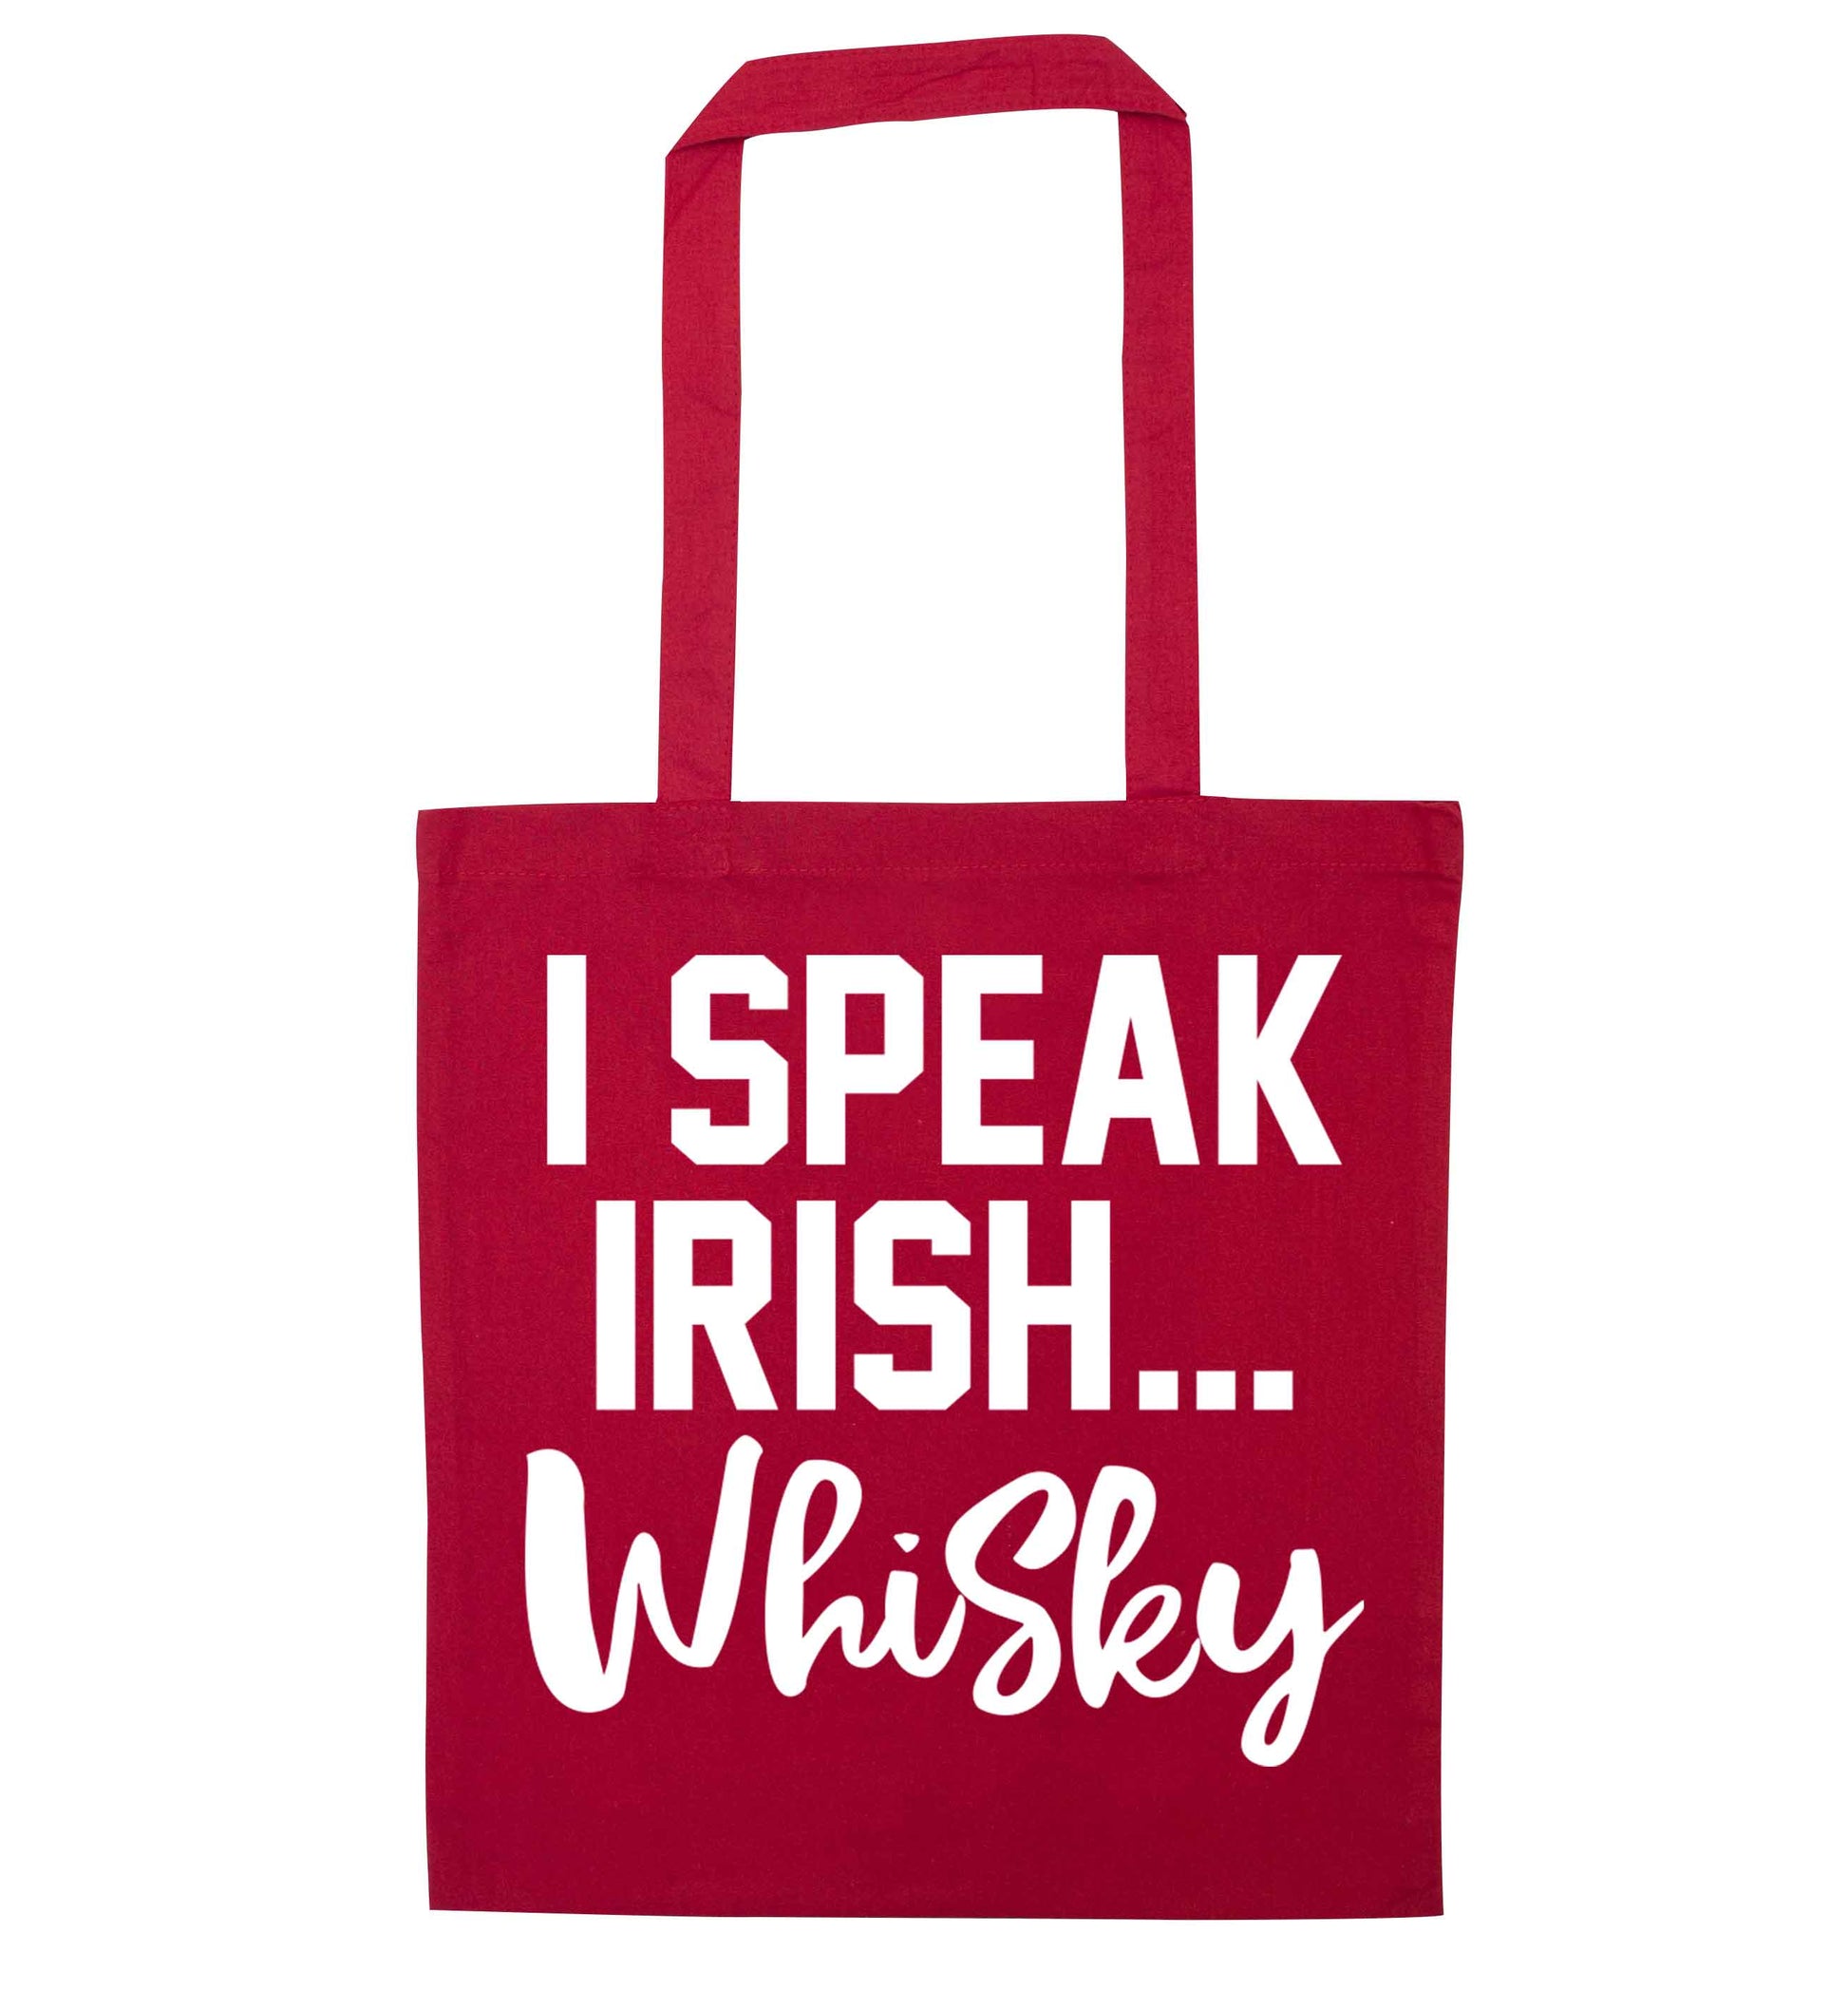 I speak Irish whisky red tote bag